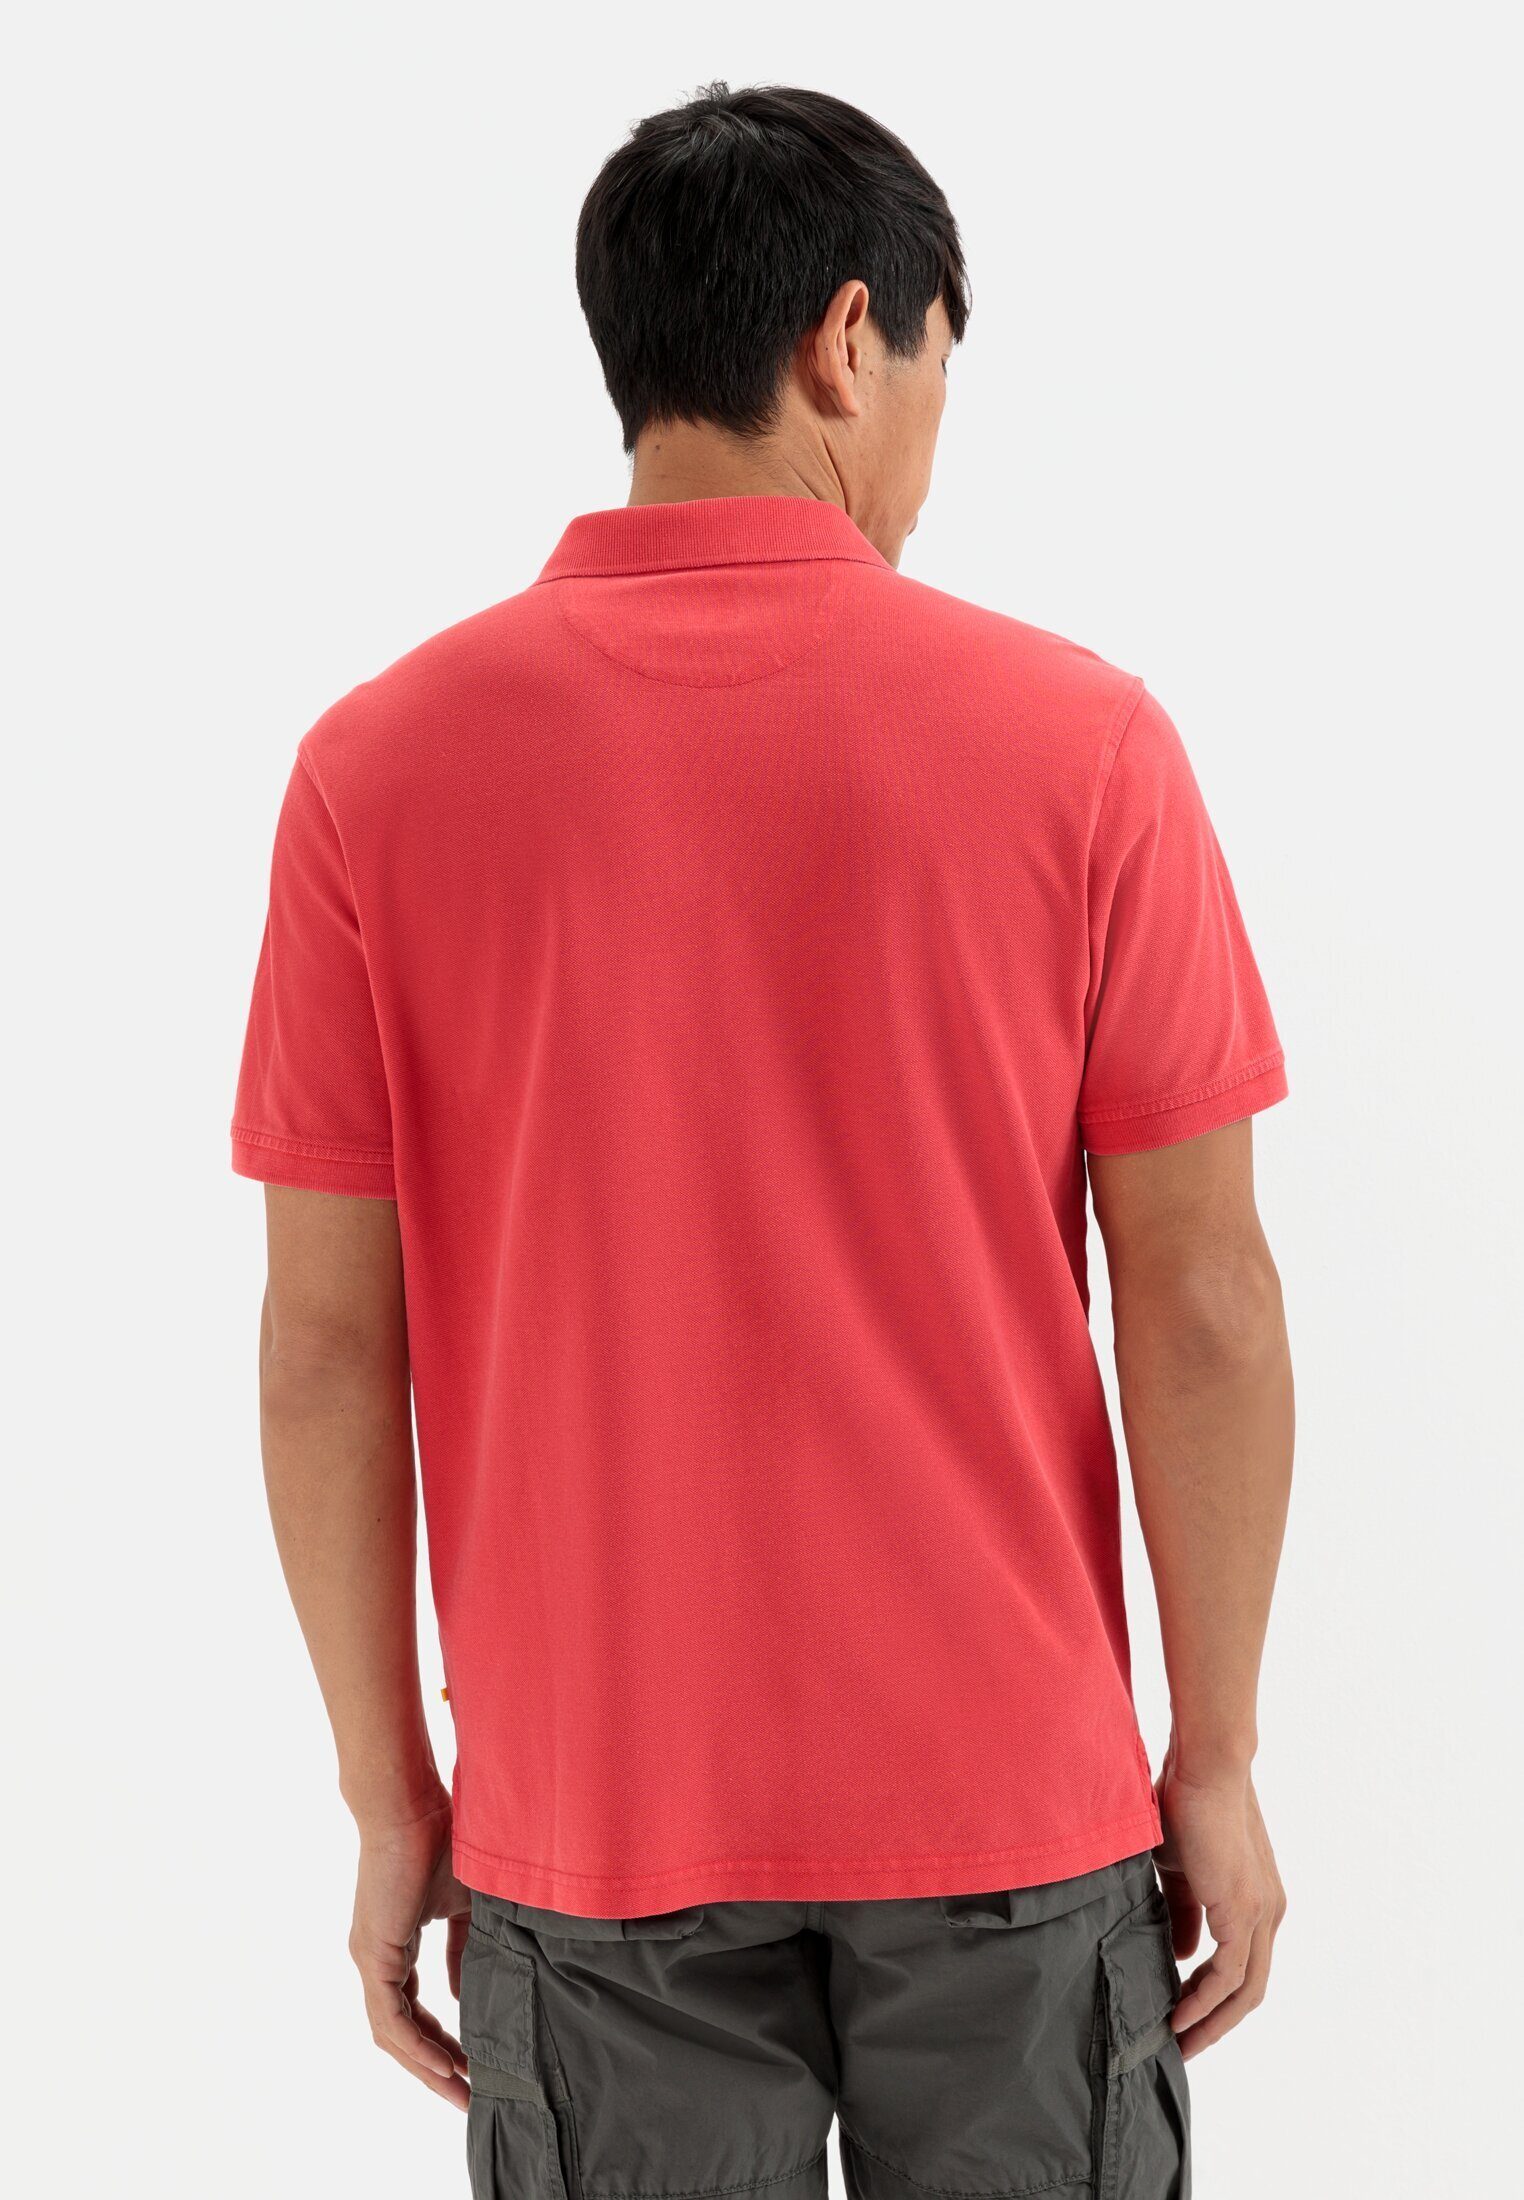 Poloshirt Rot Baumwolle active camel reiner Shirts_Poloshirt aus